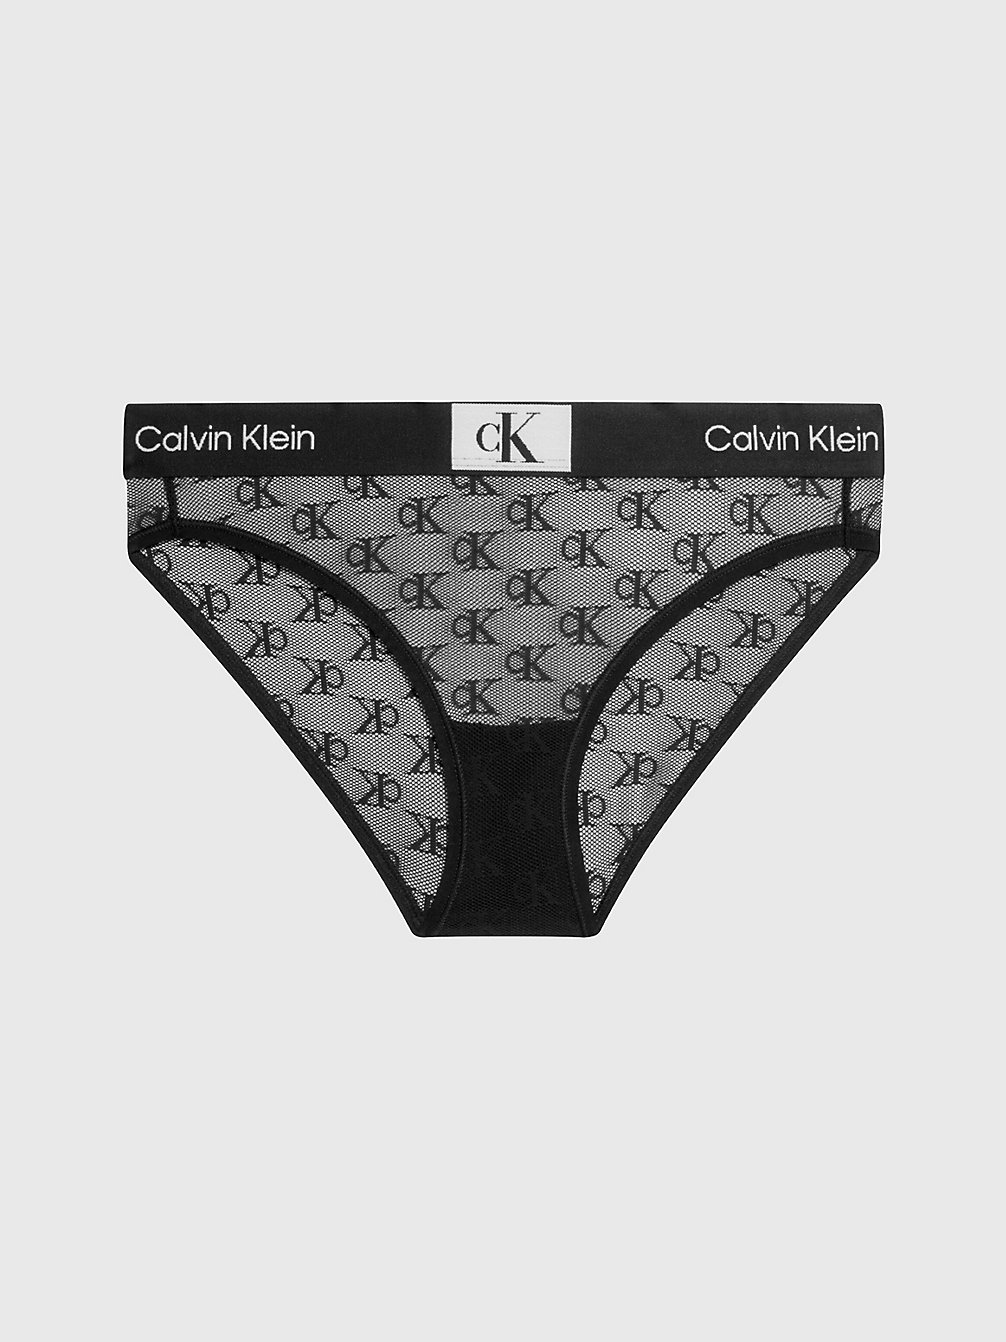 Culotte Dentelle - Ck96 > BLACK > undefined femmes > Calvin Klein